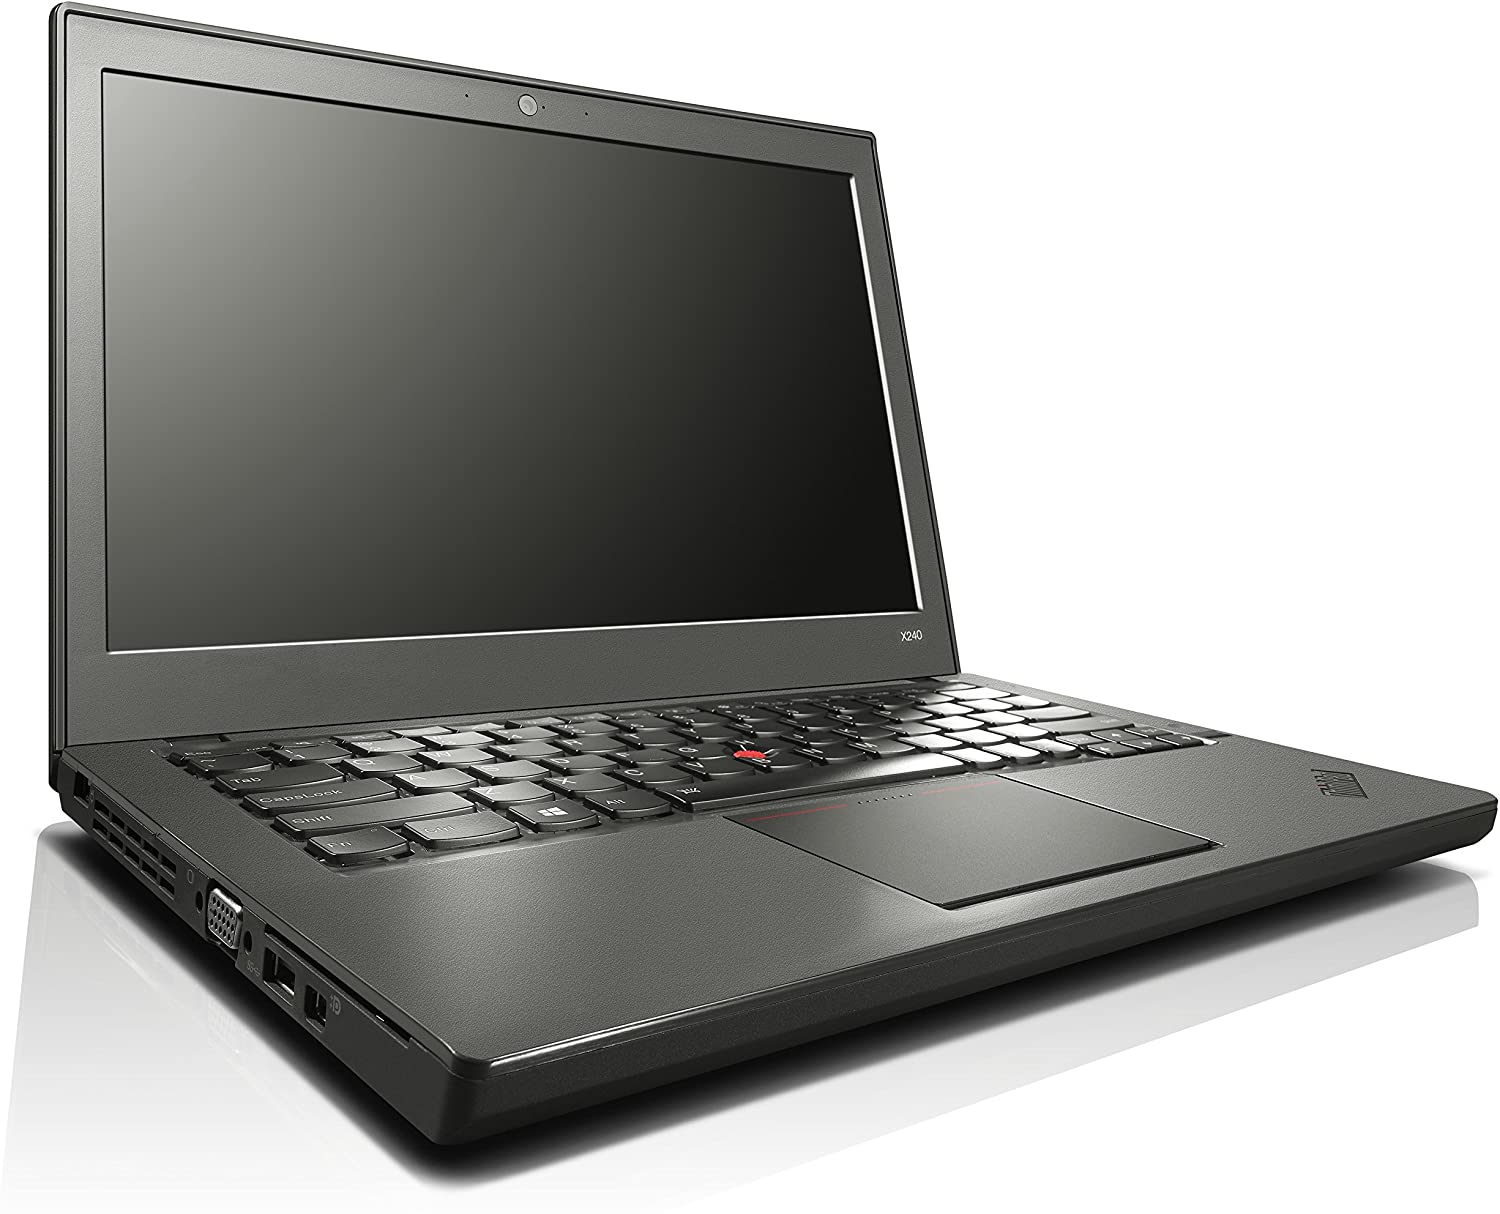 Lenovo Thinkpad X250 i5 5500u 2.2GHz 8GB Ram 256GB SSD Windows 10 Pro.